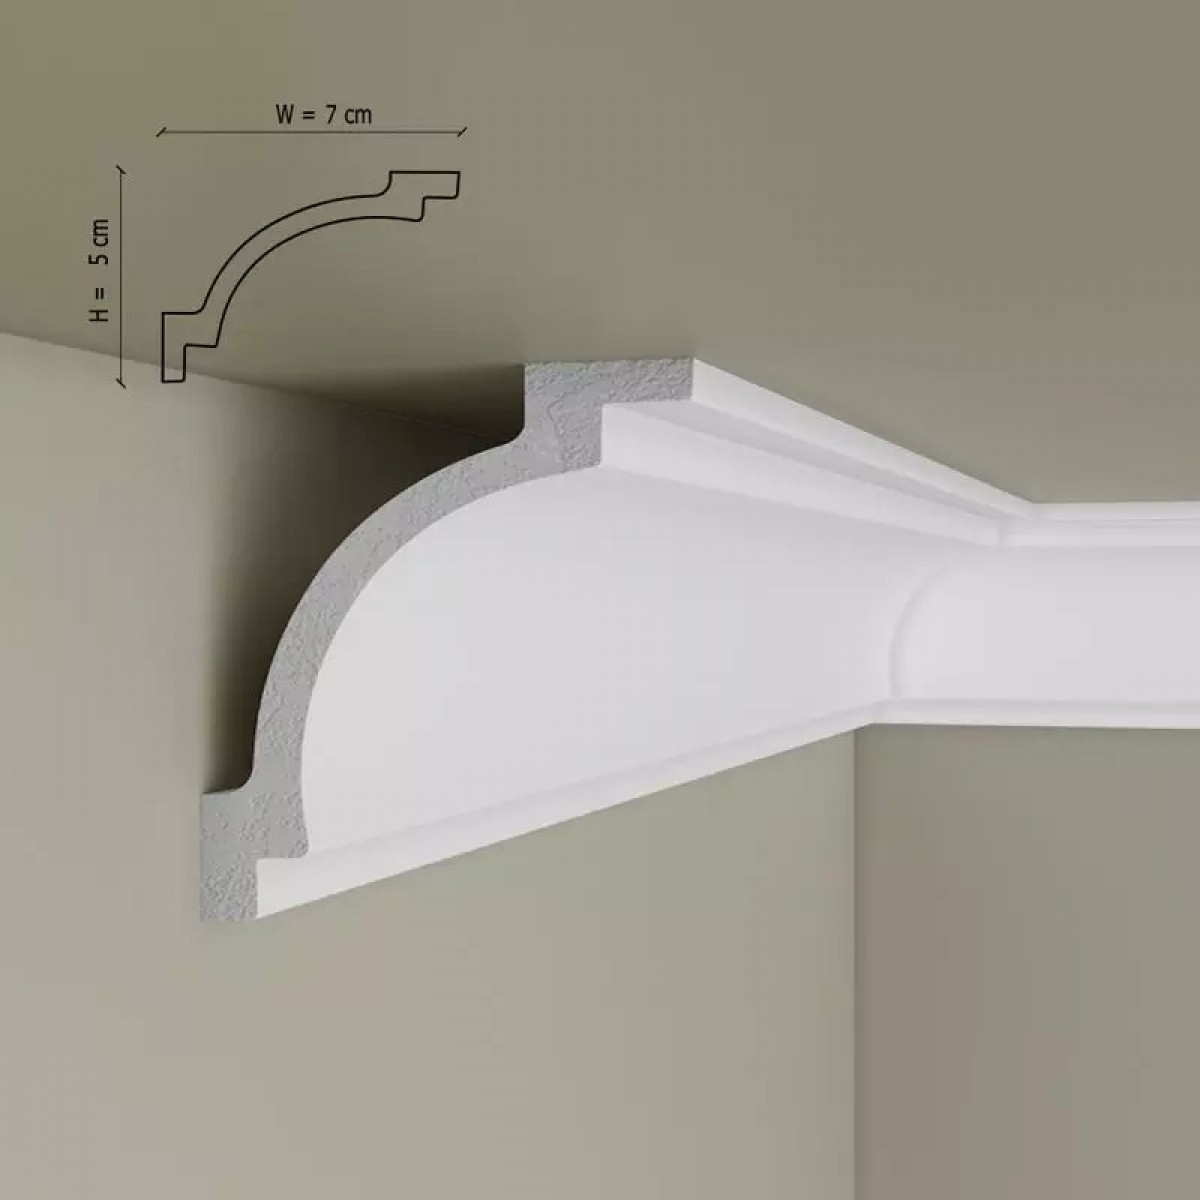 Cornișe tavan Manavi MNV-C12-5x7x200, material: polimer rigid